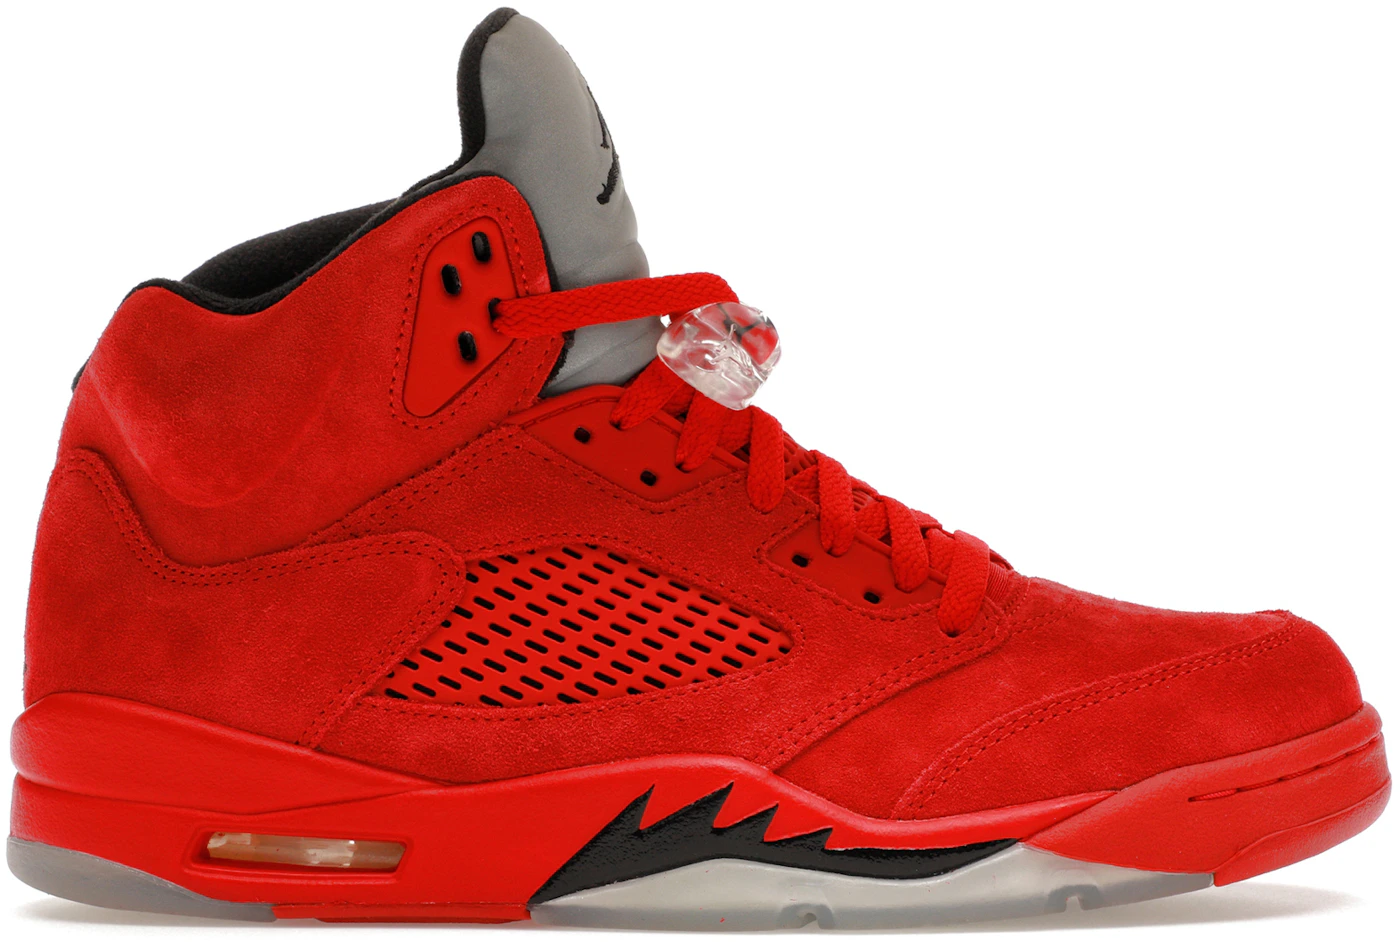 Nike Jordan V IV III Sneakers Shoes Basketball High Womens Size 9